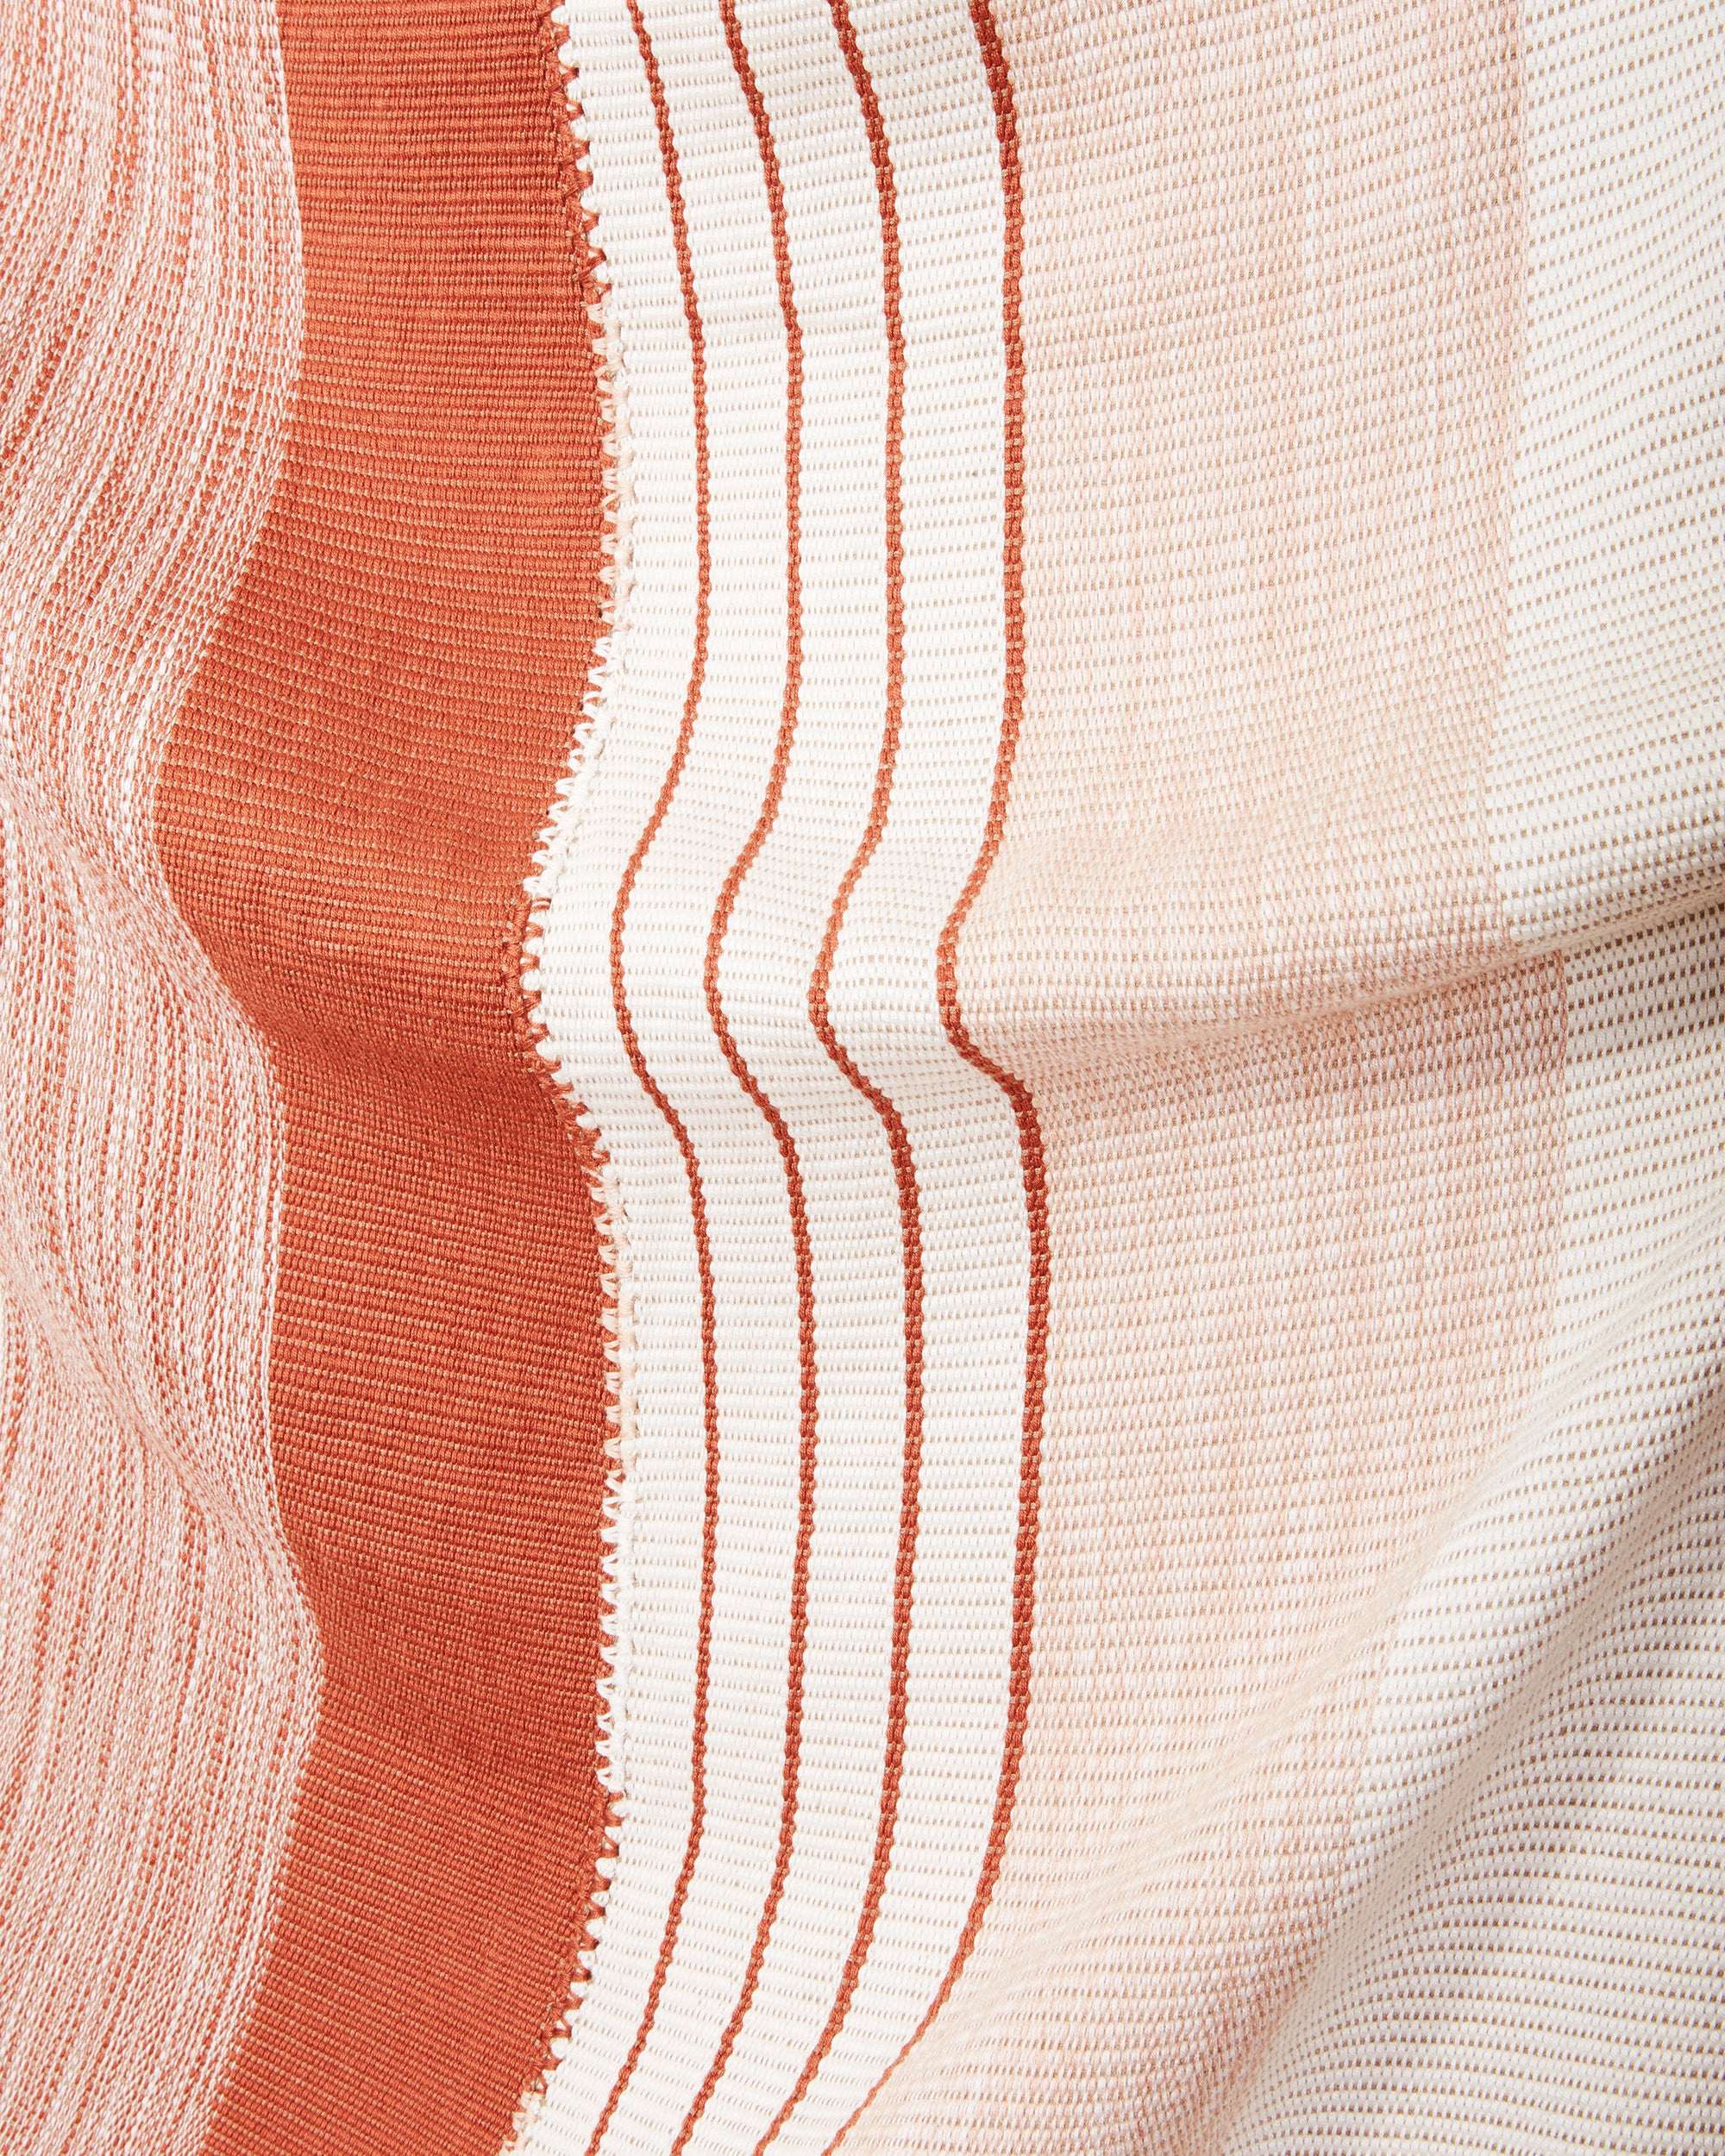 close-up of ethically handwoven oeko-tex cotton MINNA Pantelho throw striped rust, cream and white. 